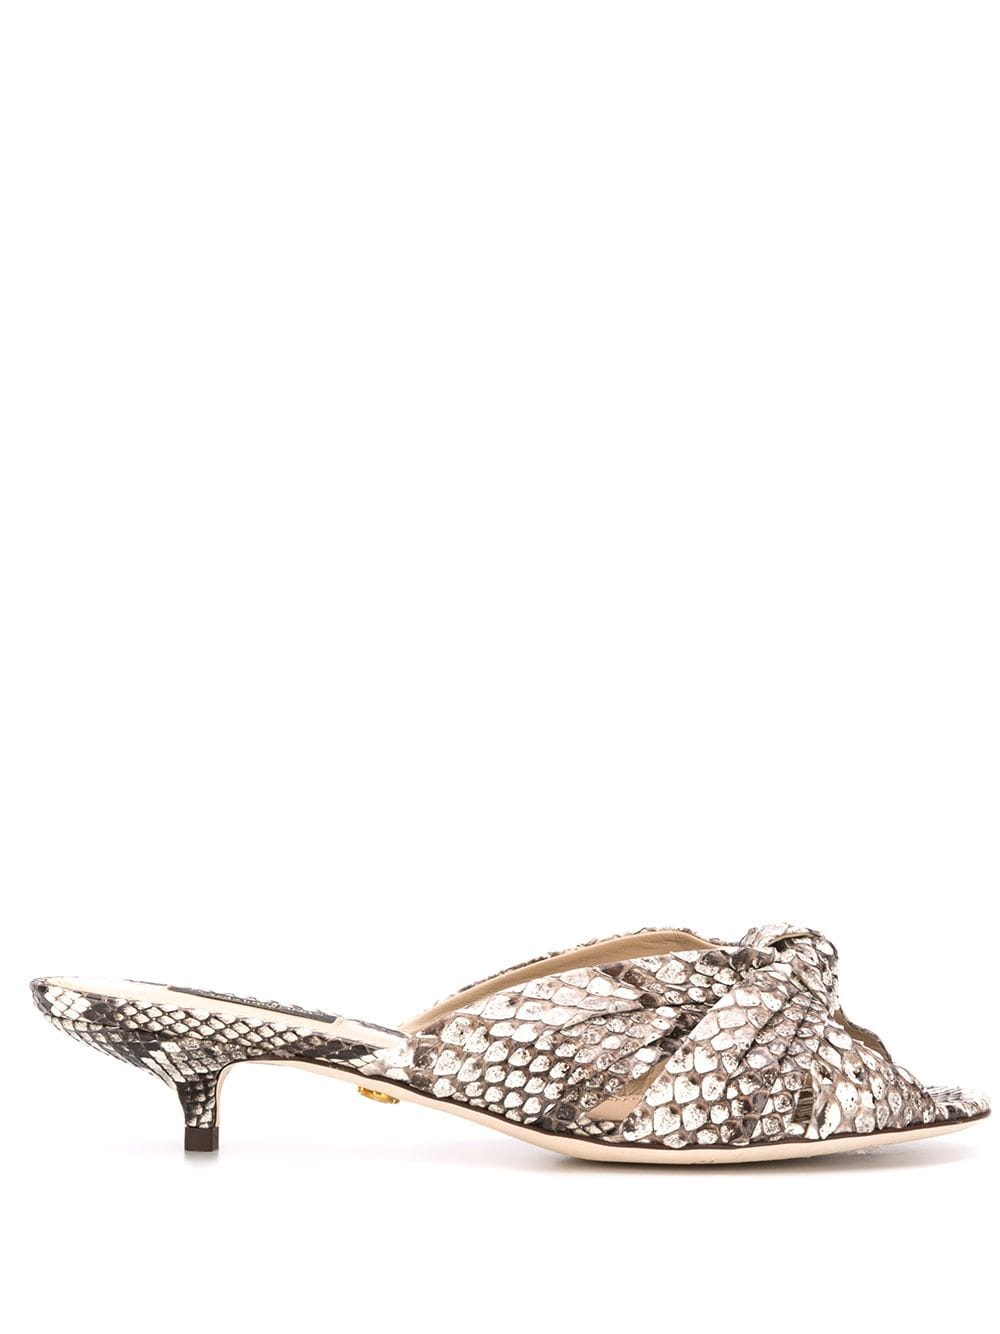 Leather Sandals дамски обувки Dolce & Gabbana 849218705_35